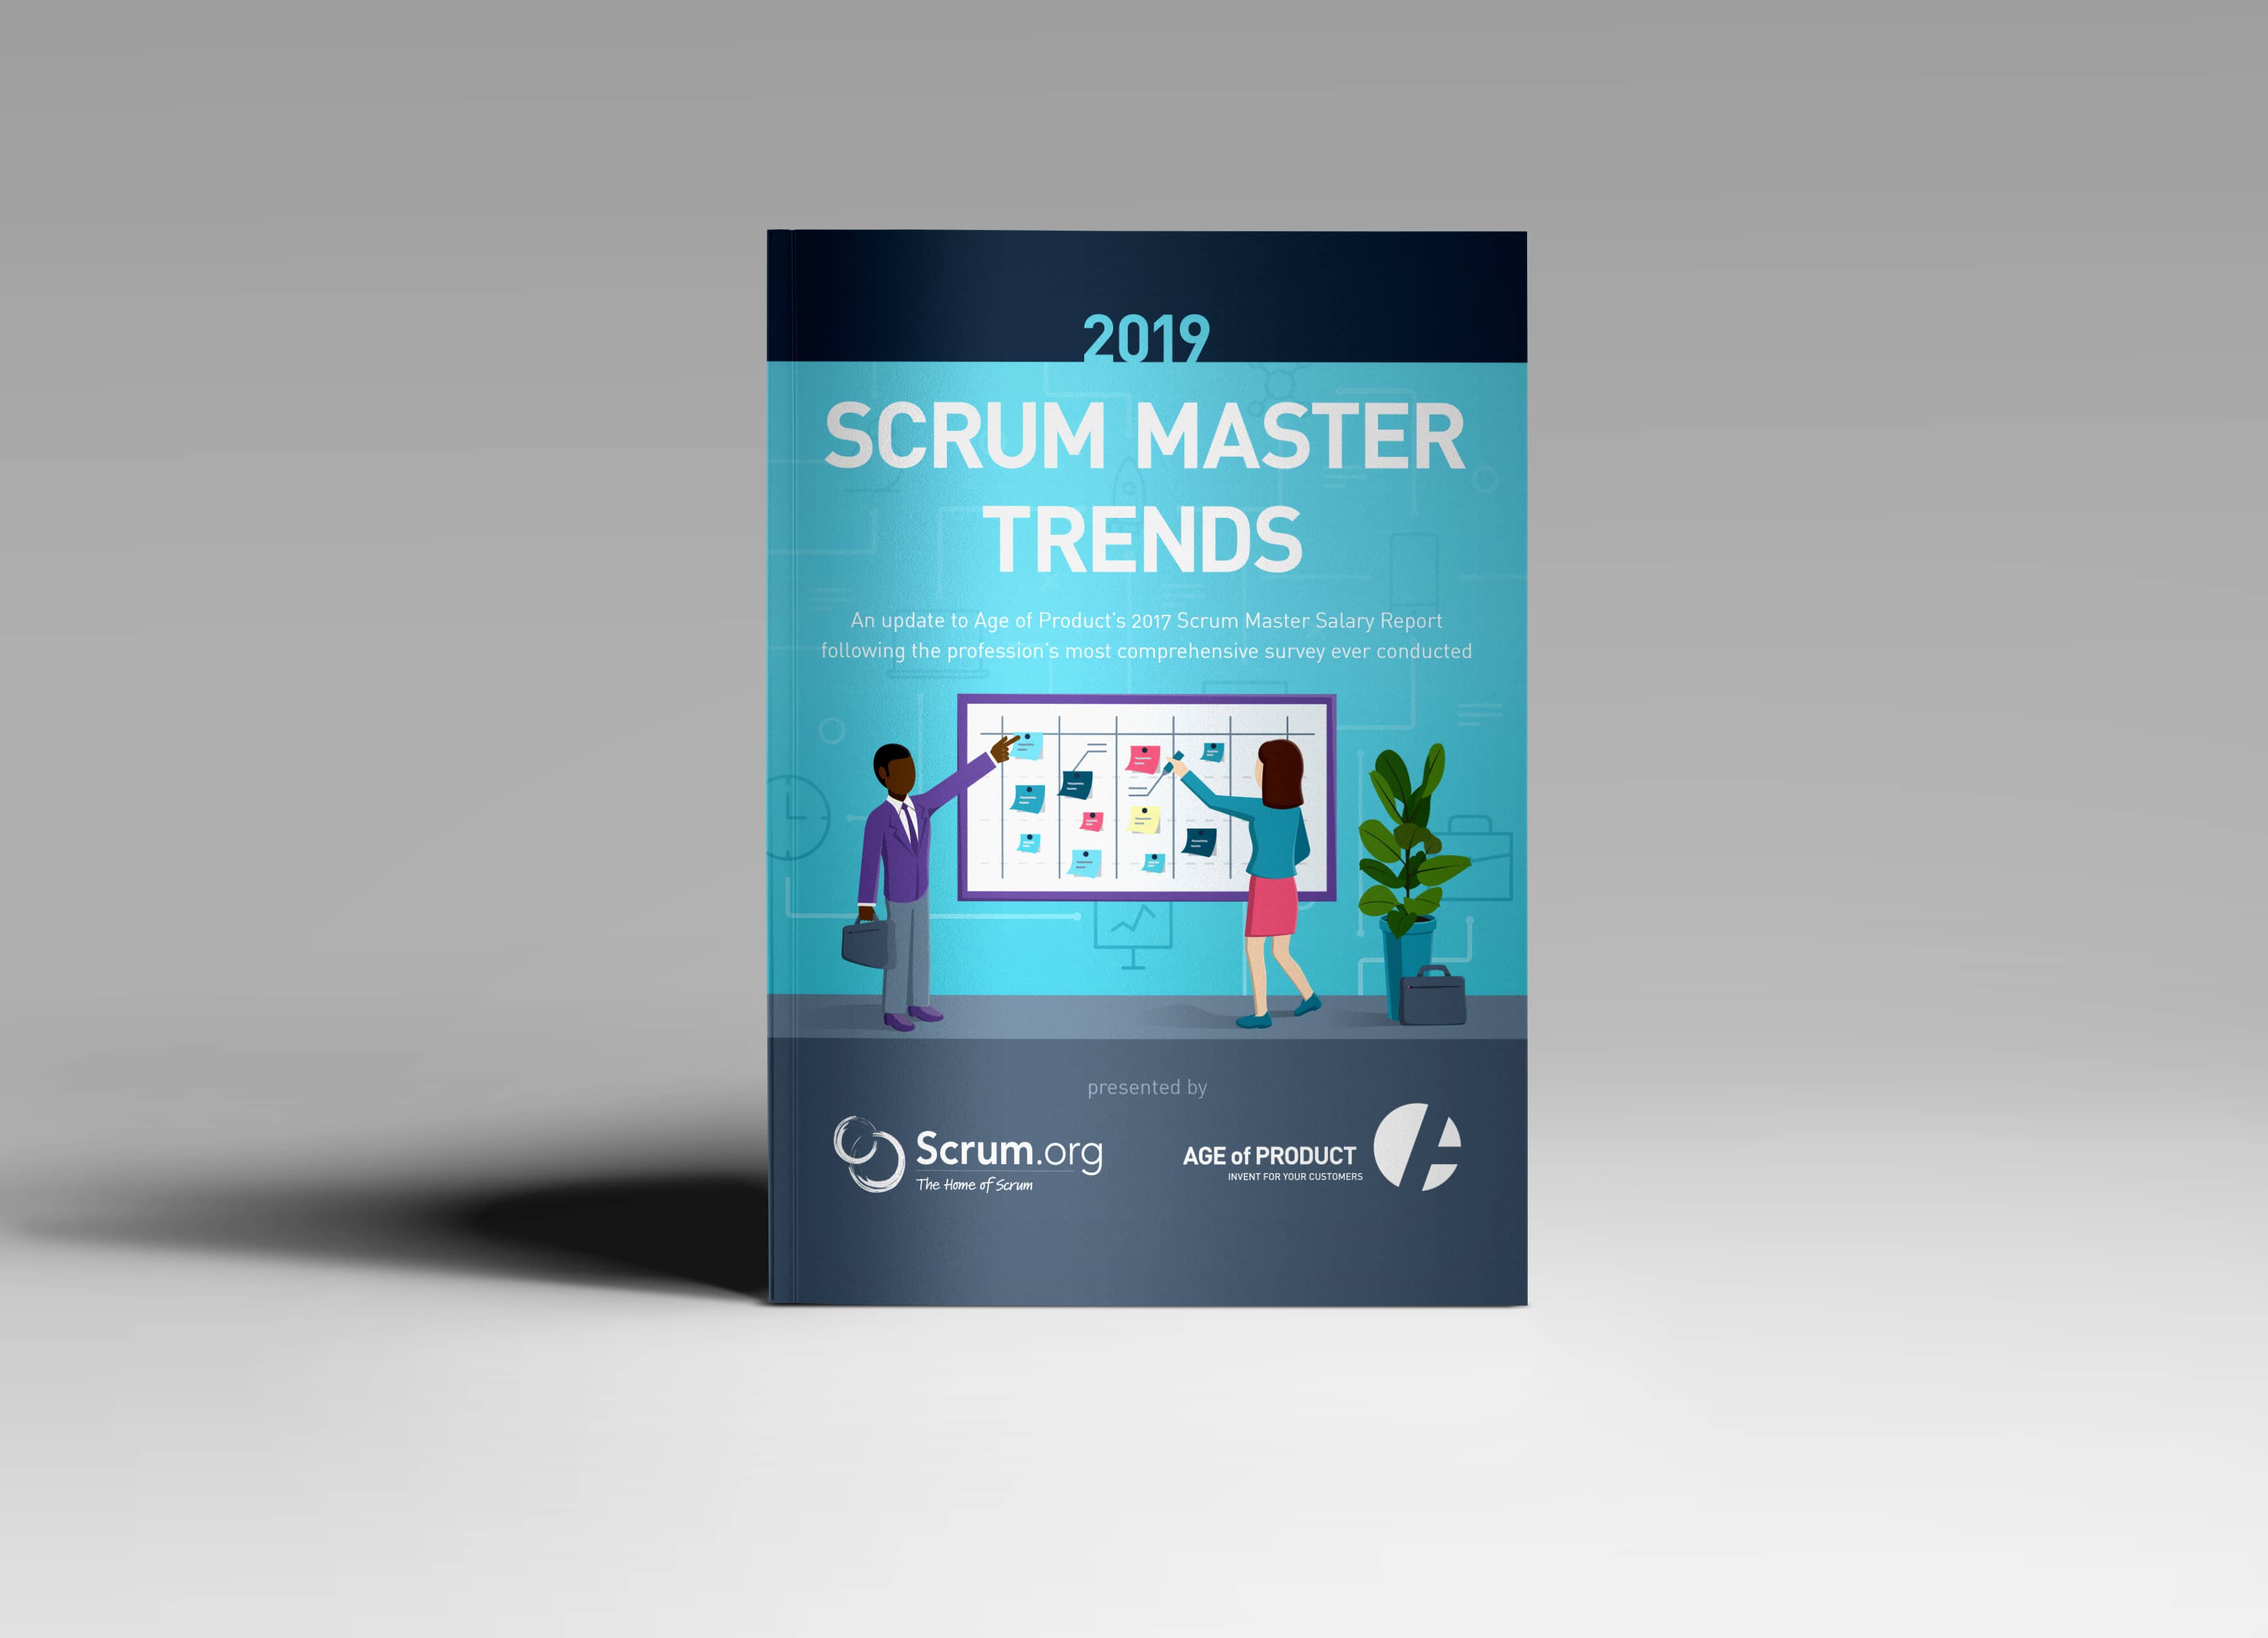 Scrum Master Trends 2019 by Scrum.org